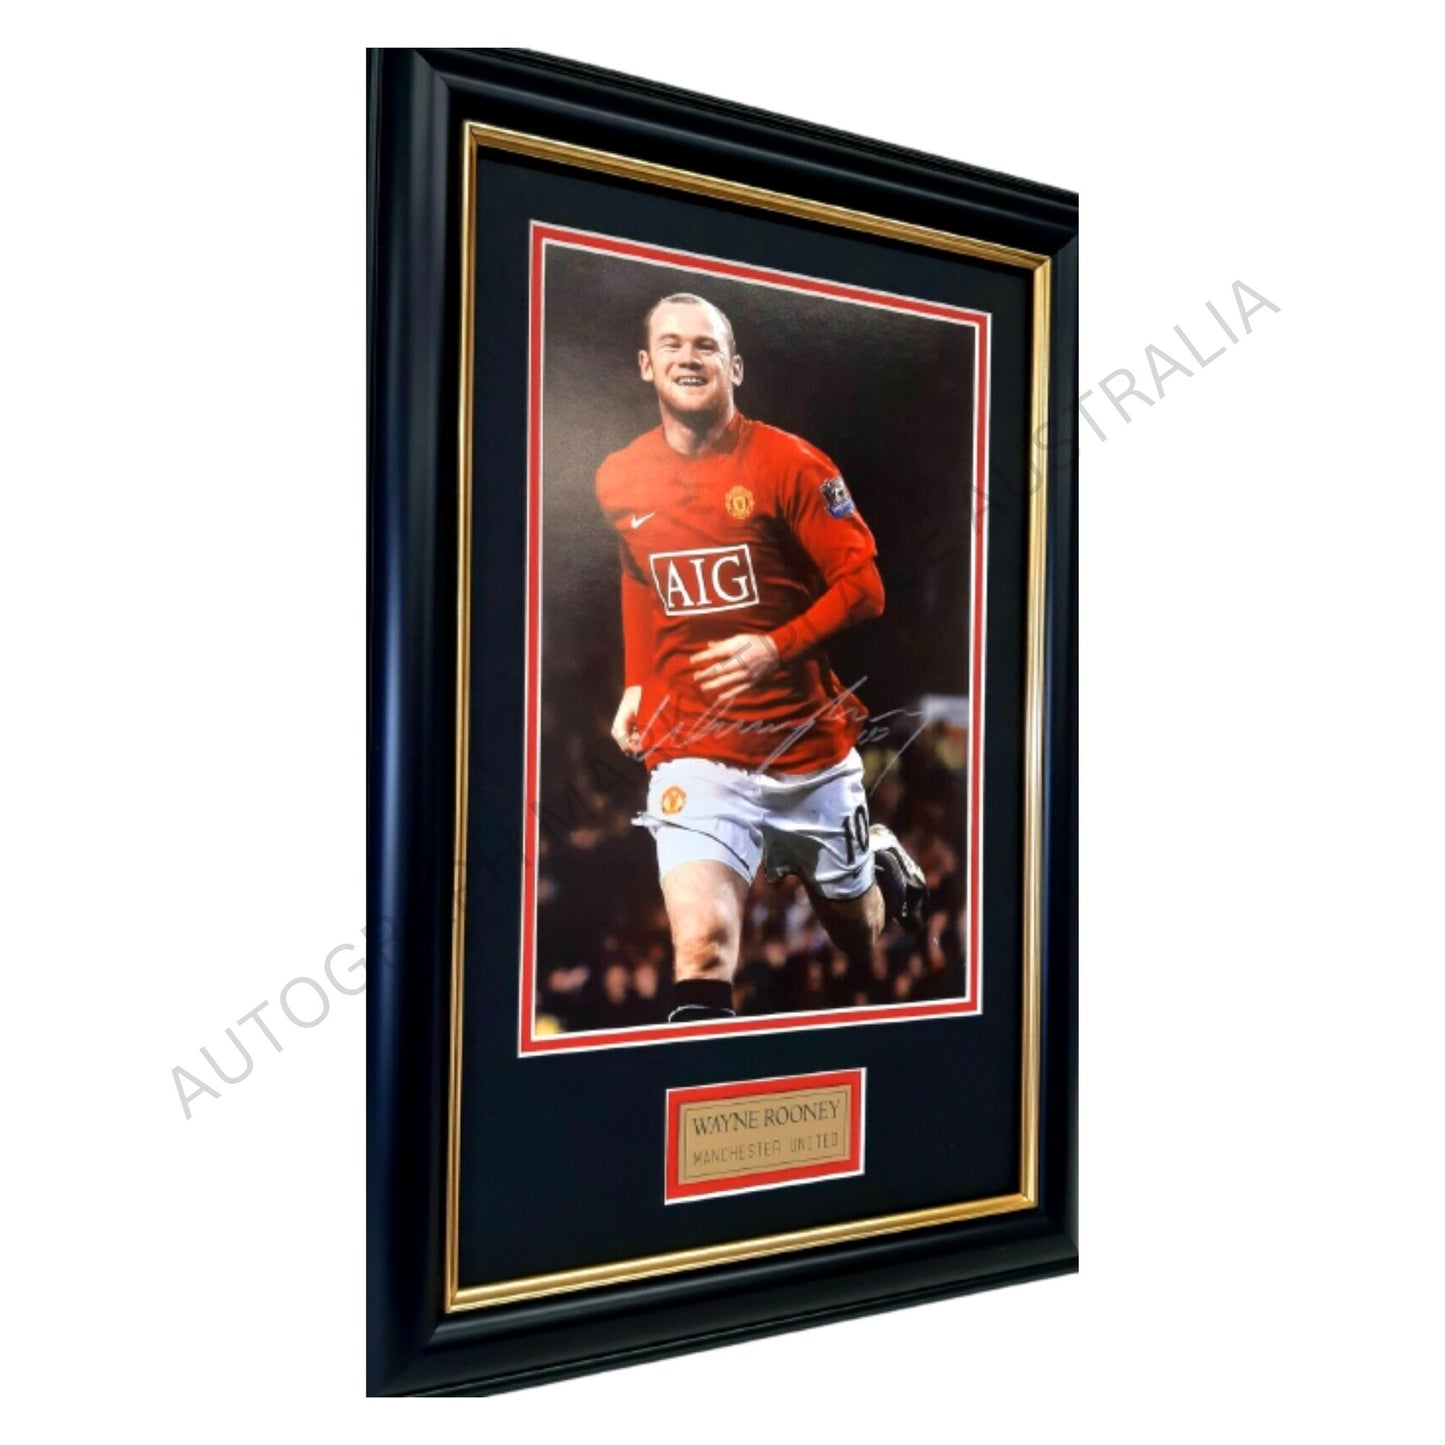 Wayne Rooney Signed Framed Manchester United Memorabilia